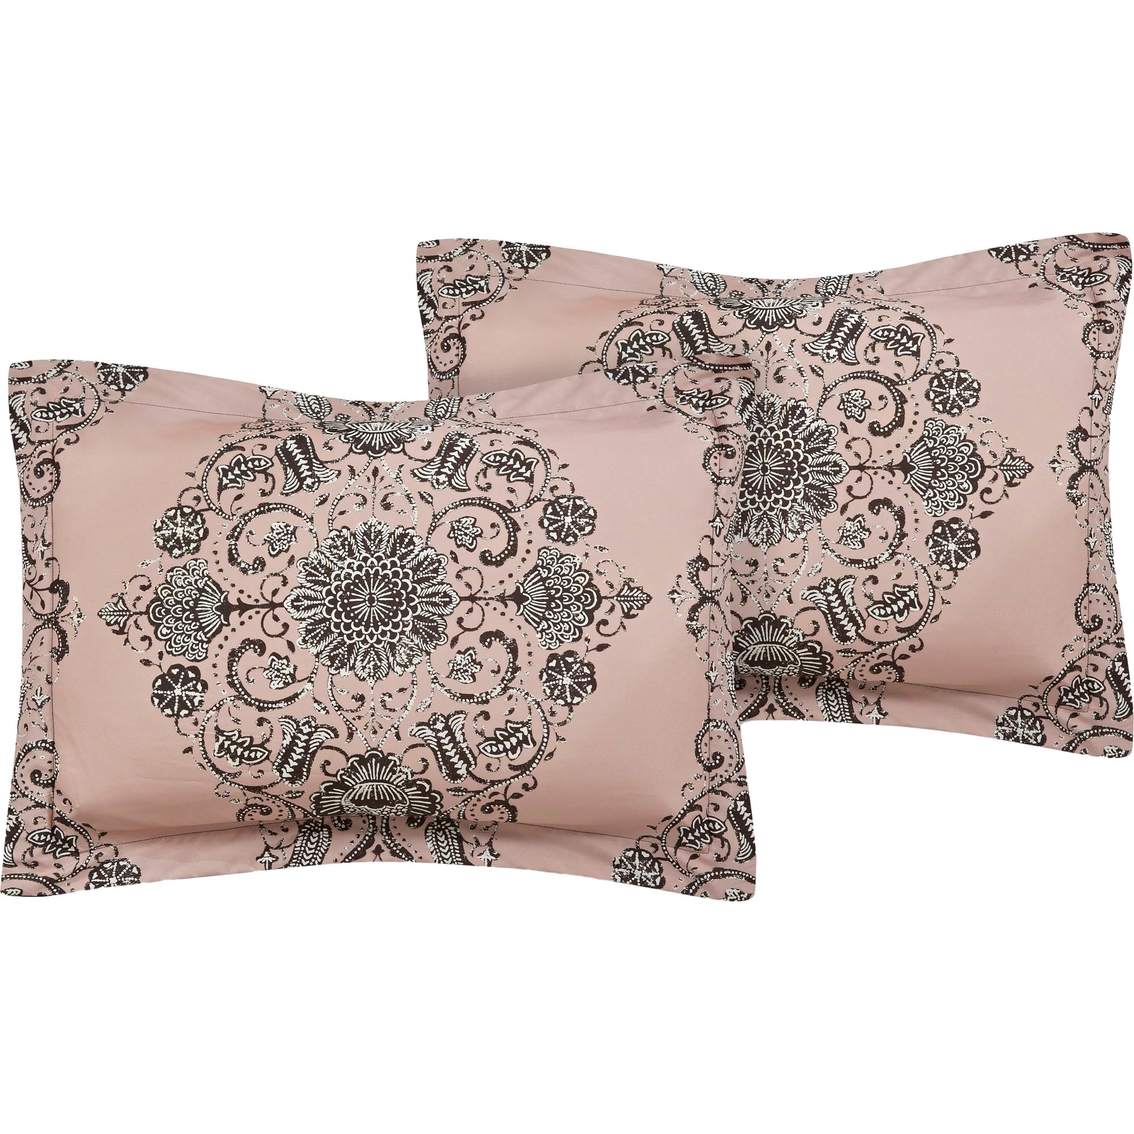 Bardot Blush 7-piece Comforter Set - Image 3 of 4